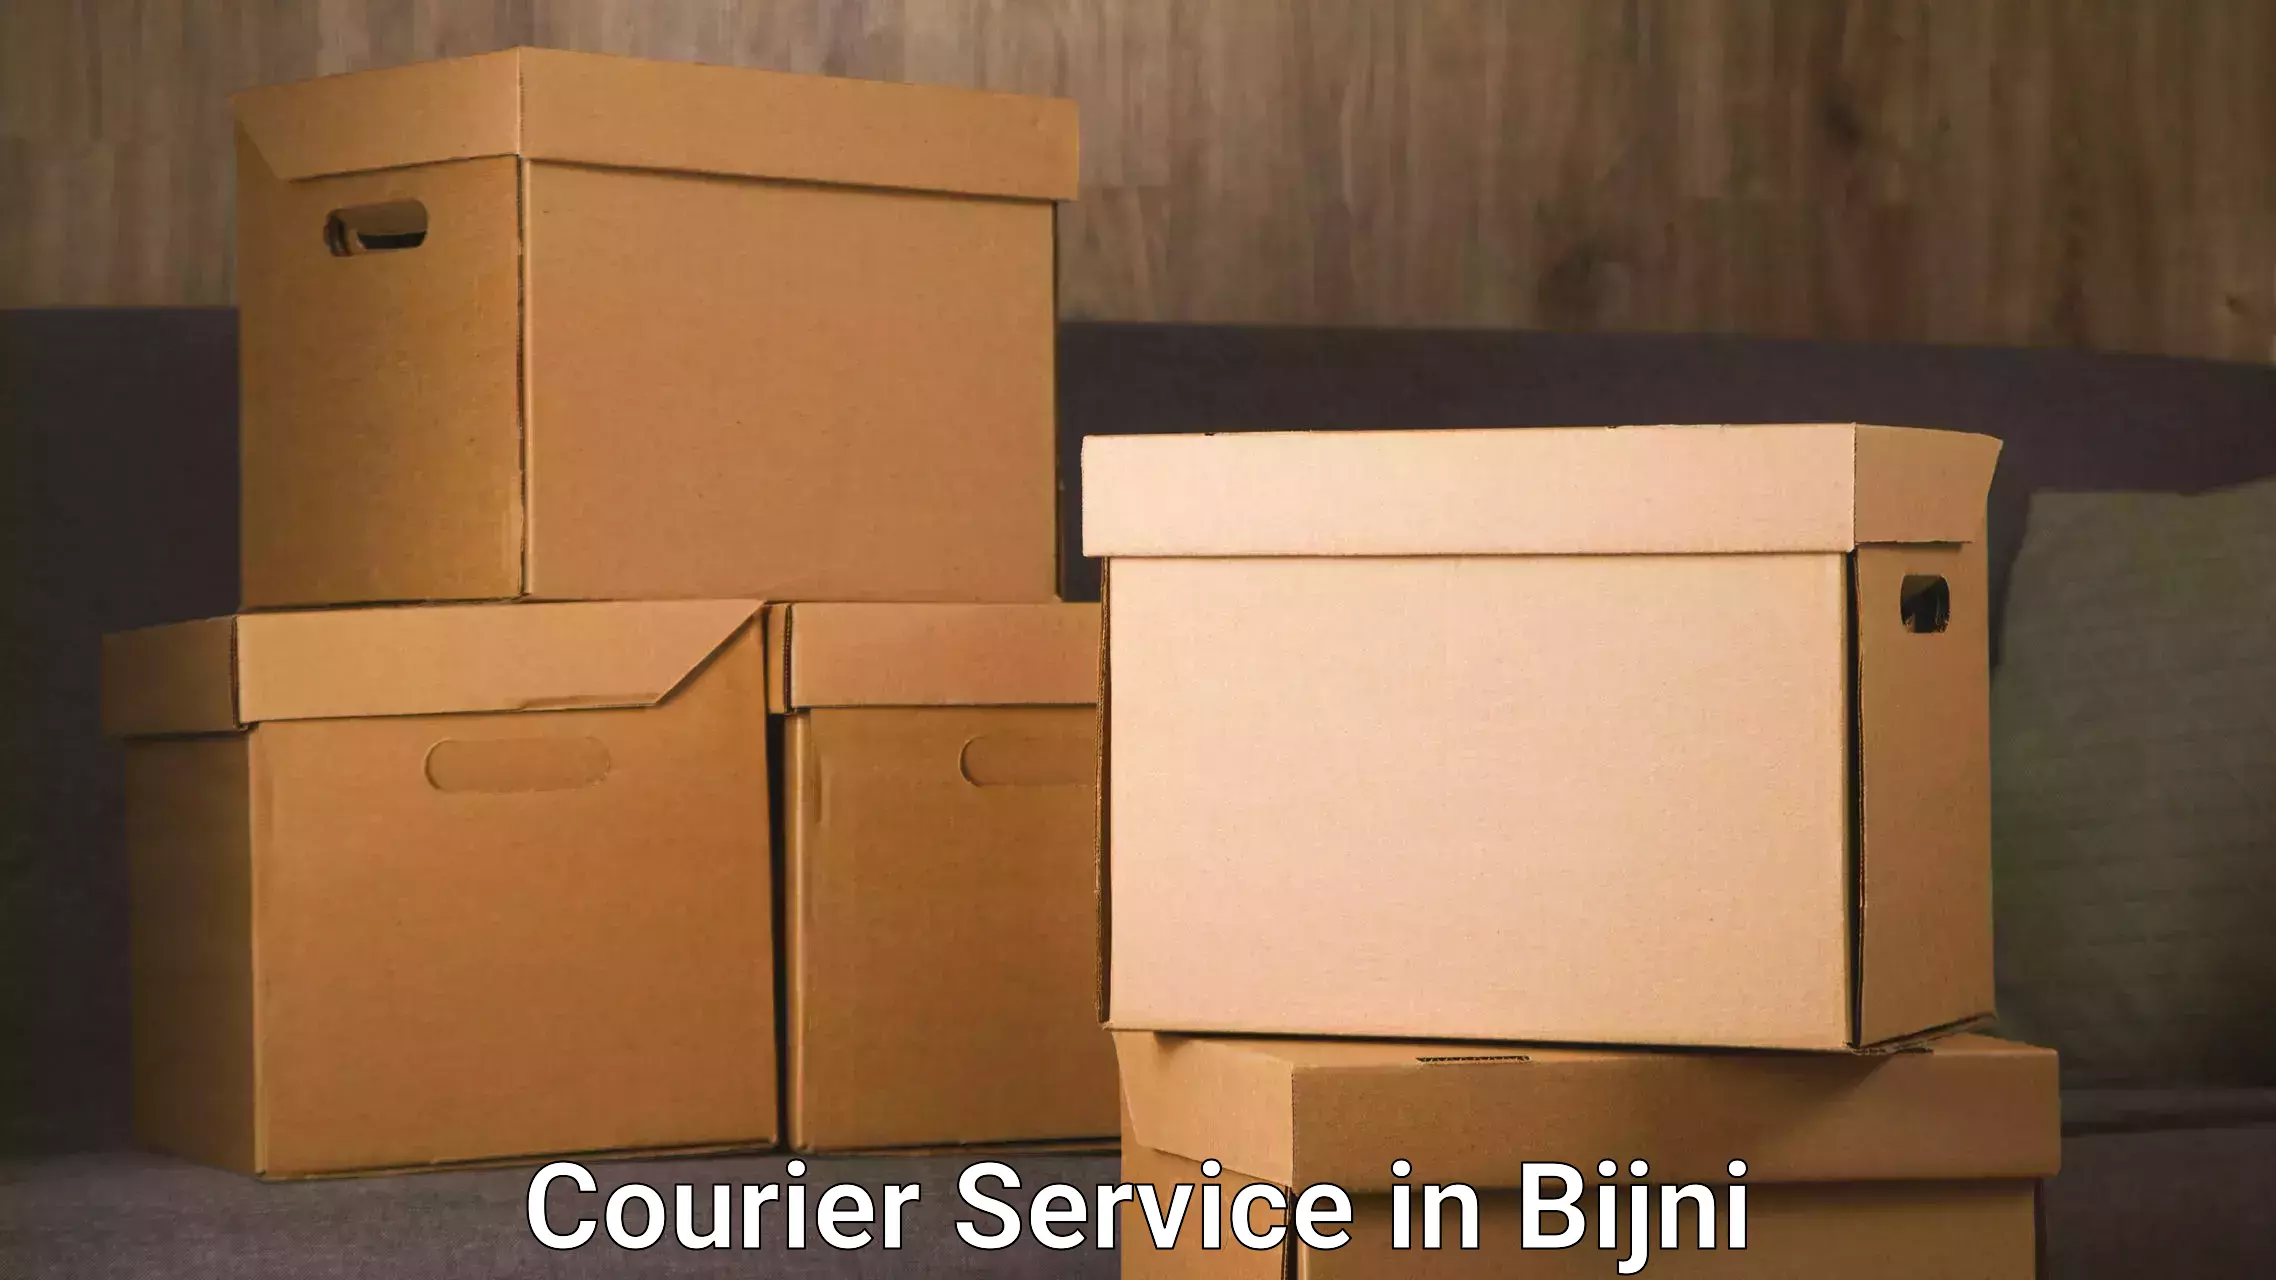 Express delivery capabilities in Bijni